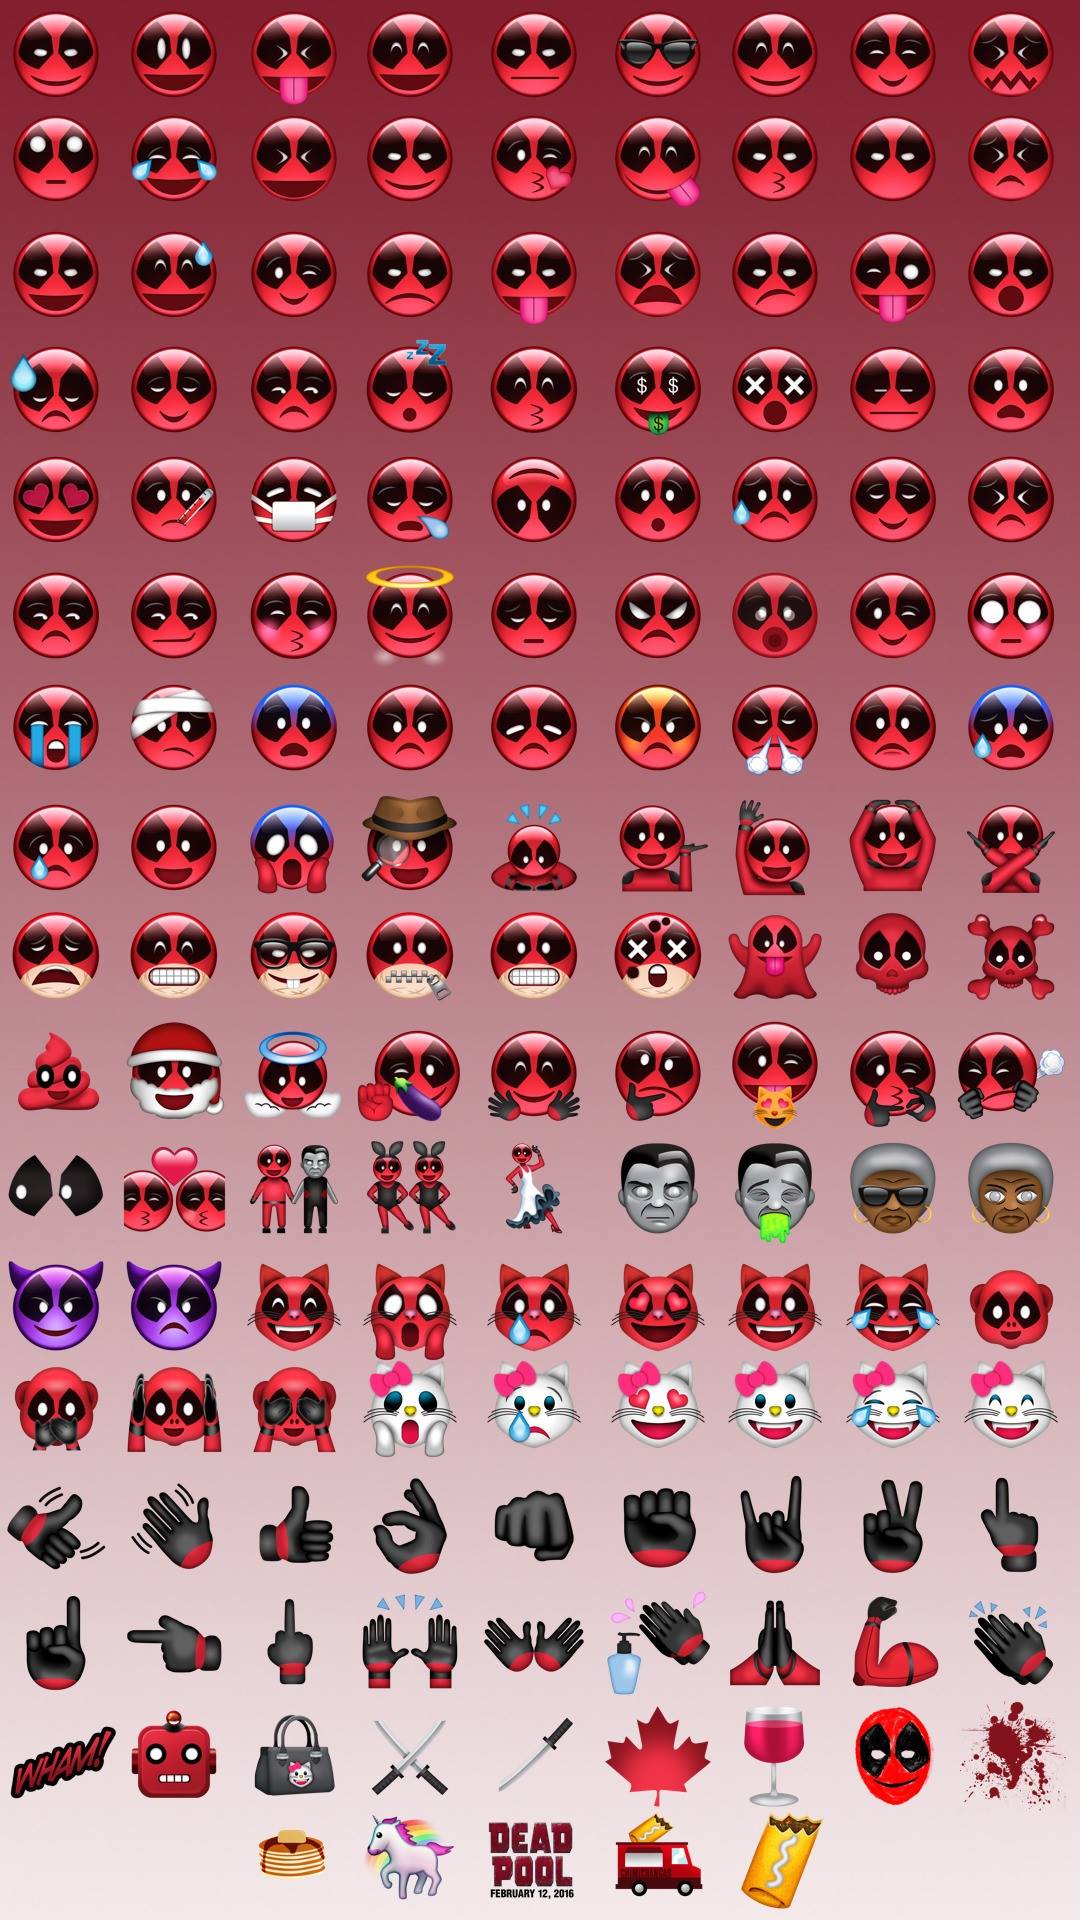 Set of emojis from Deadpool movie